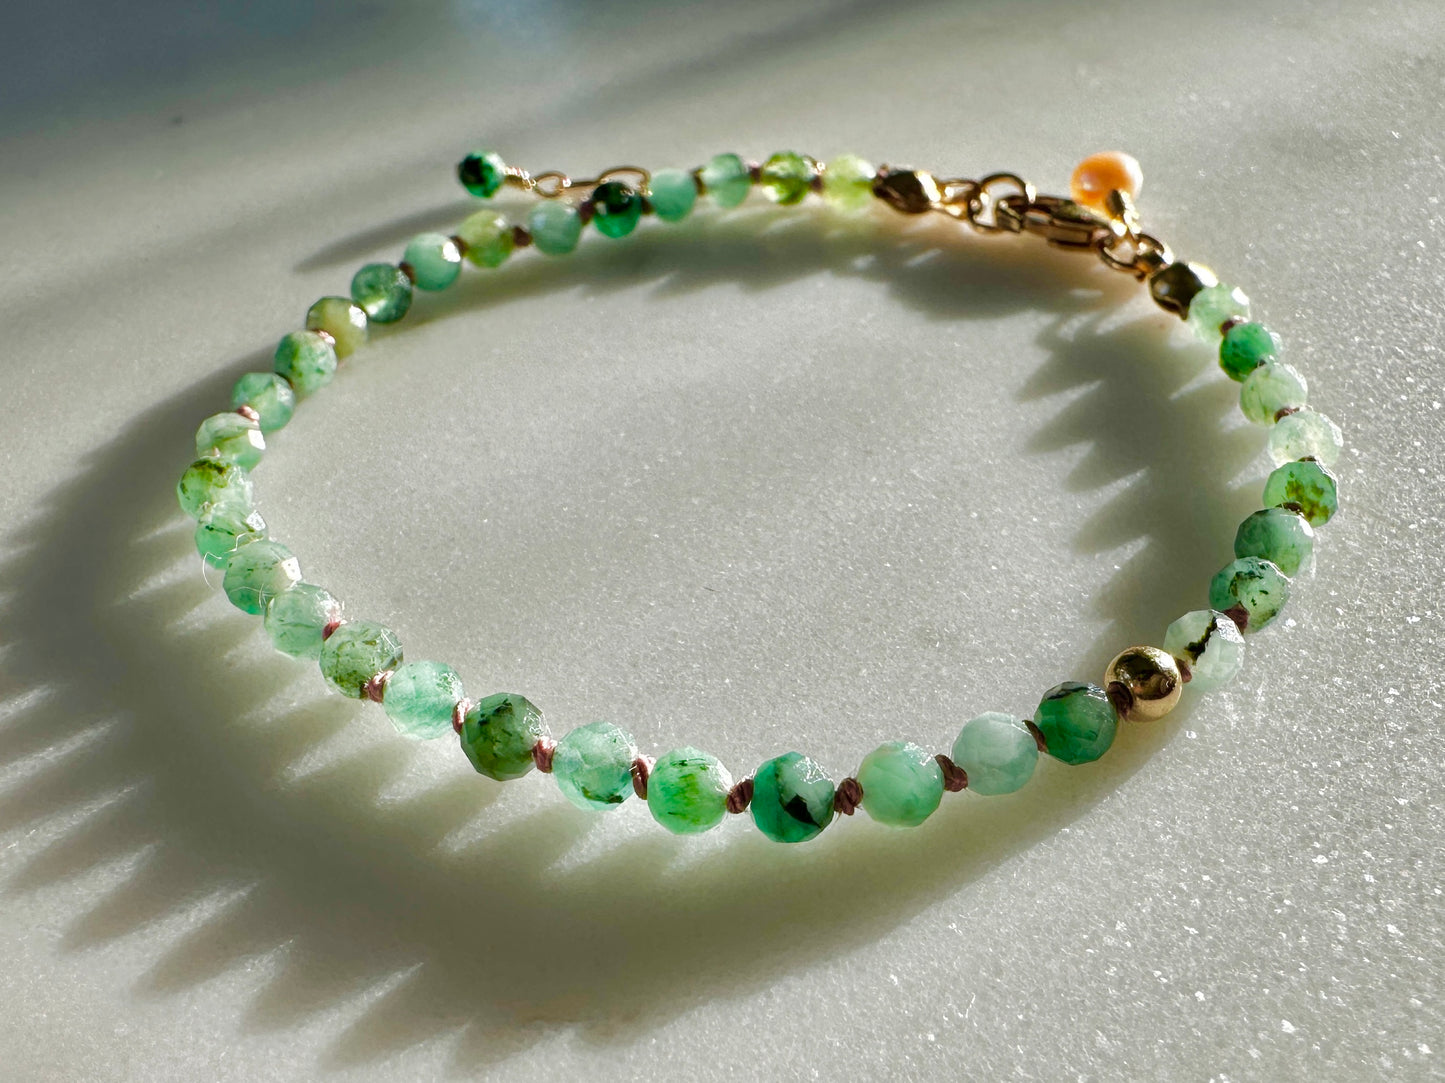 The Friendship Bracelet in Emerald